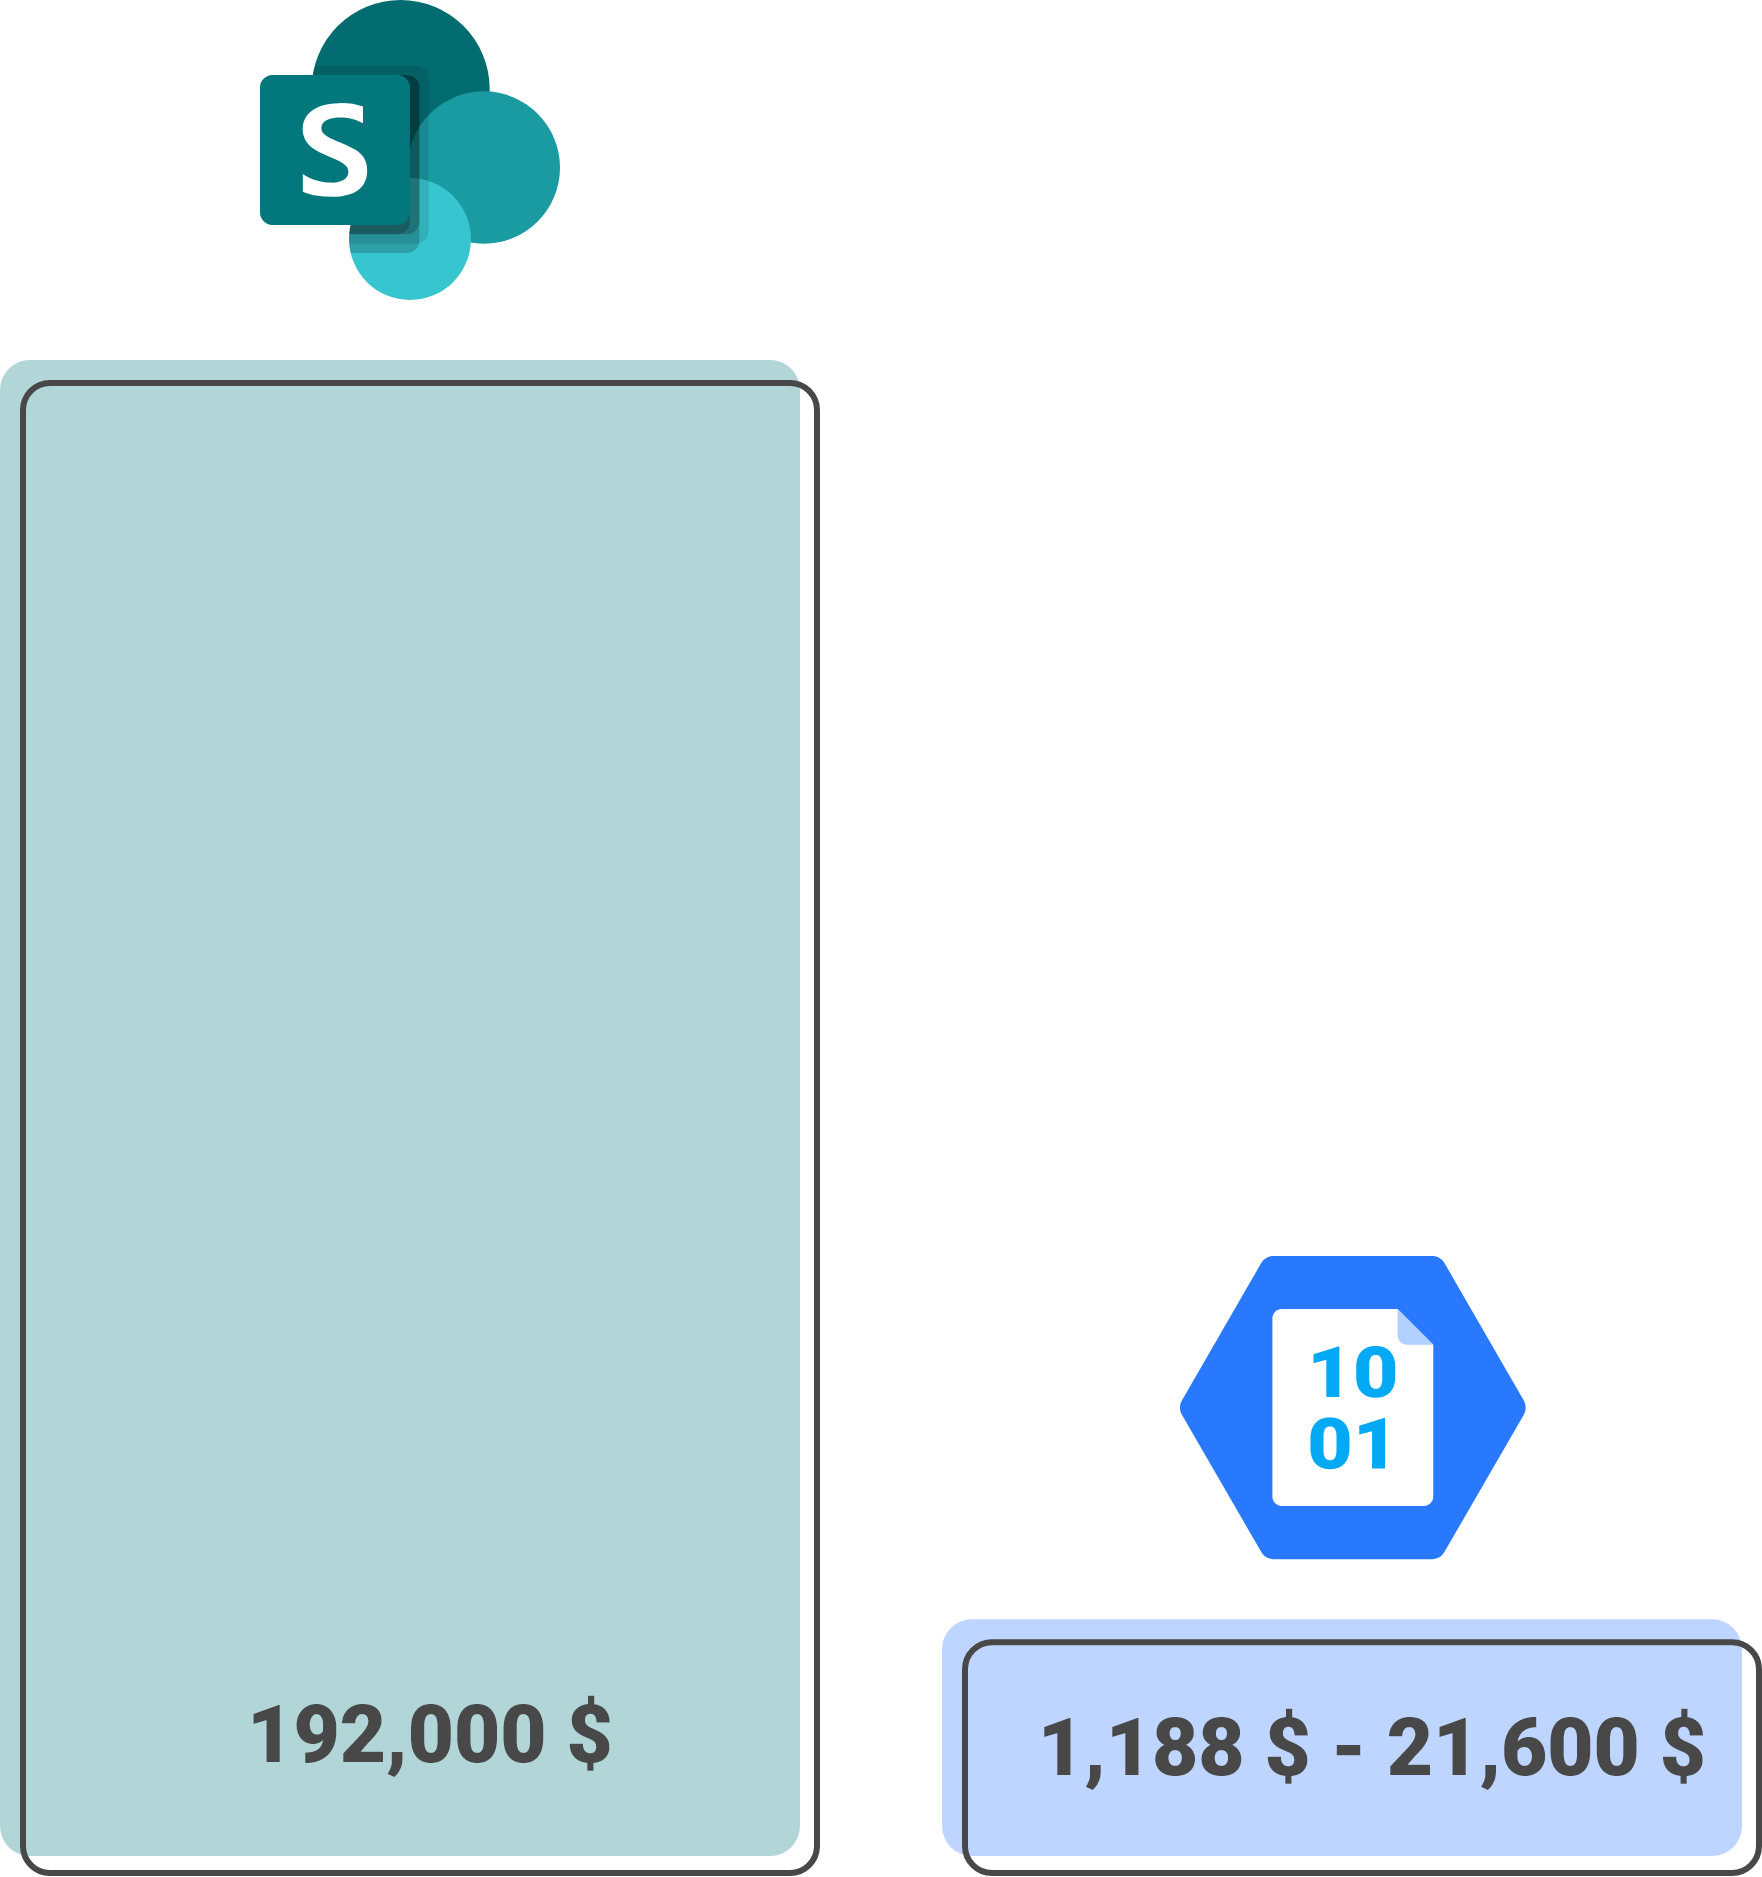 Info graphic of SharePoint storage costs in comparison to Azure Blob Storage